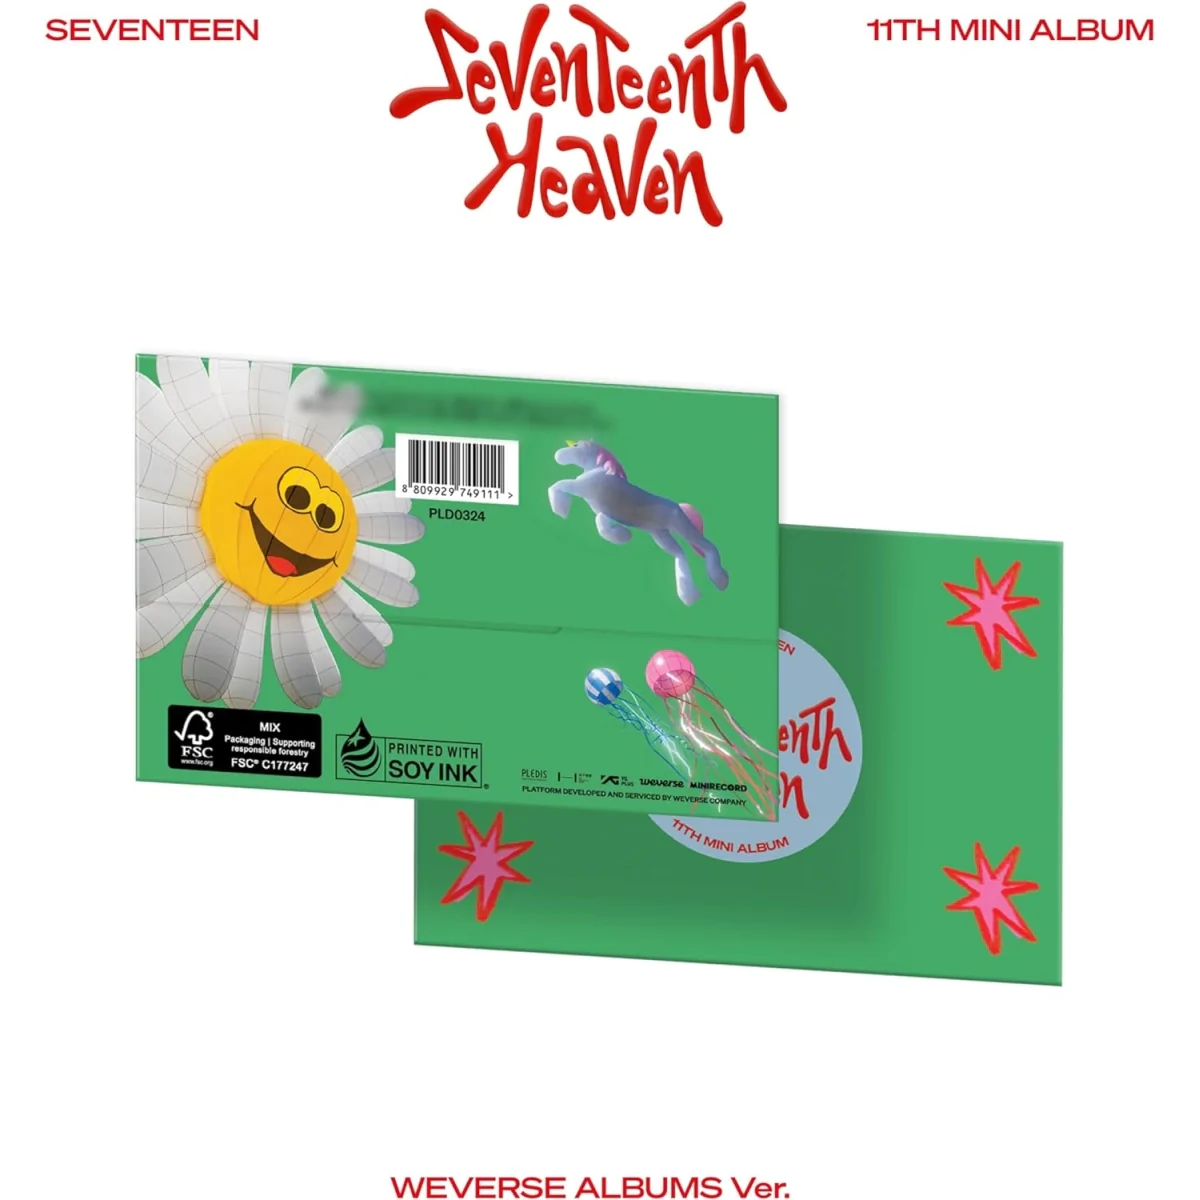 SEVENTEEN - SEVENTEENTH HEAVEN (Weverse Albums version) (11th Mini Album) 